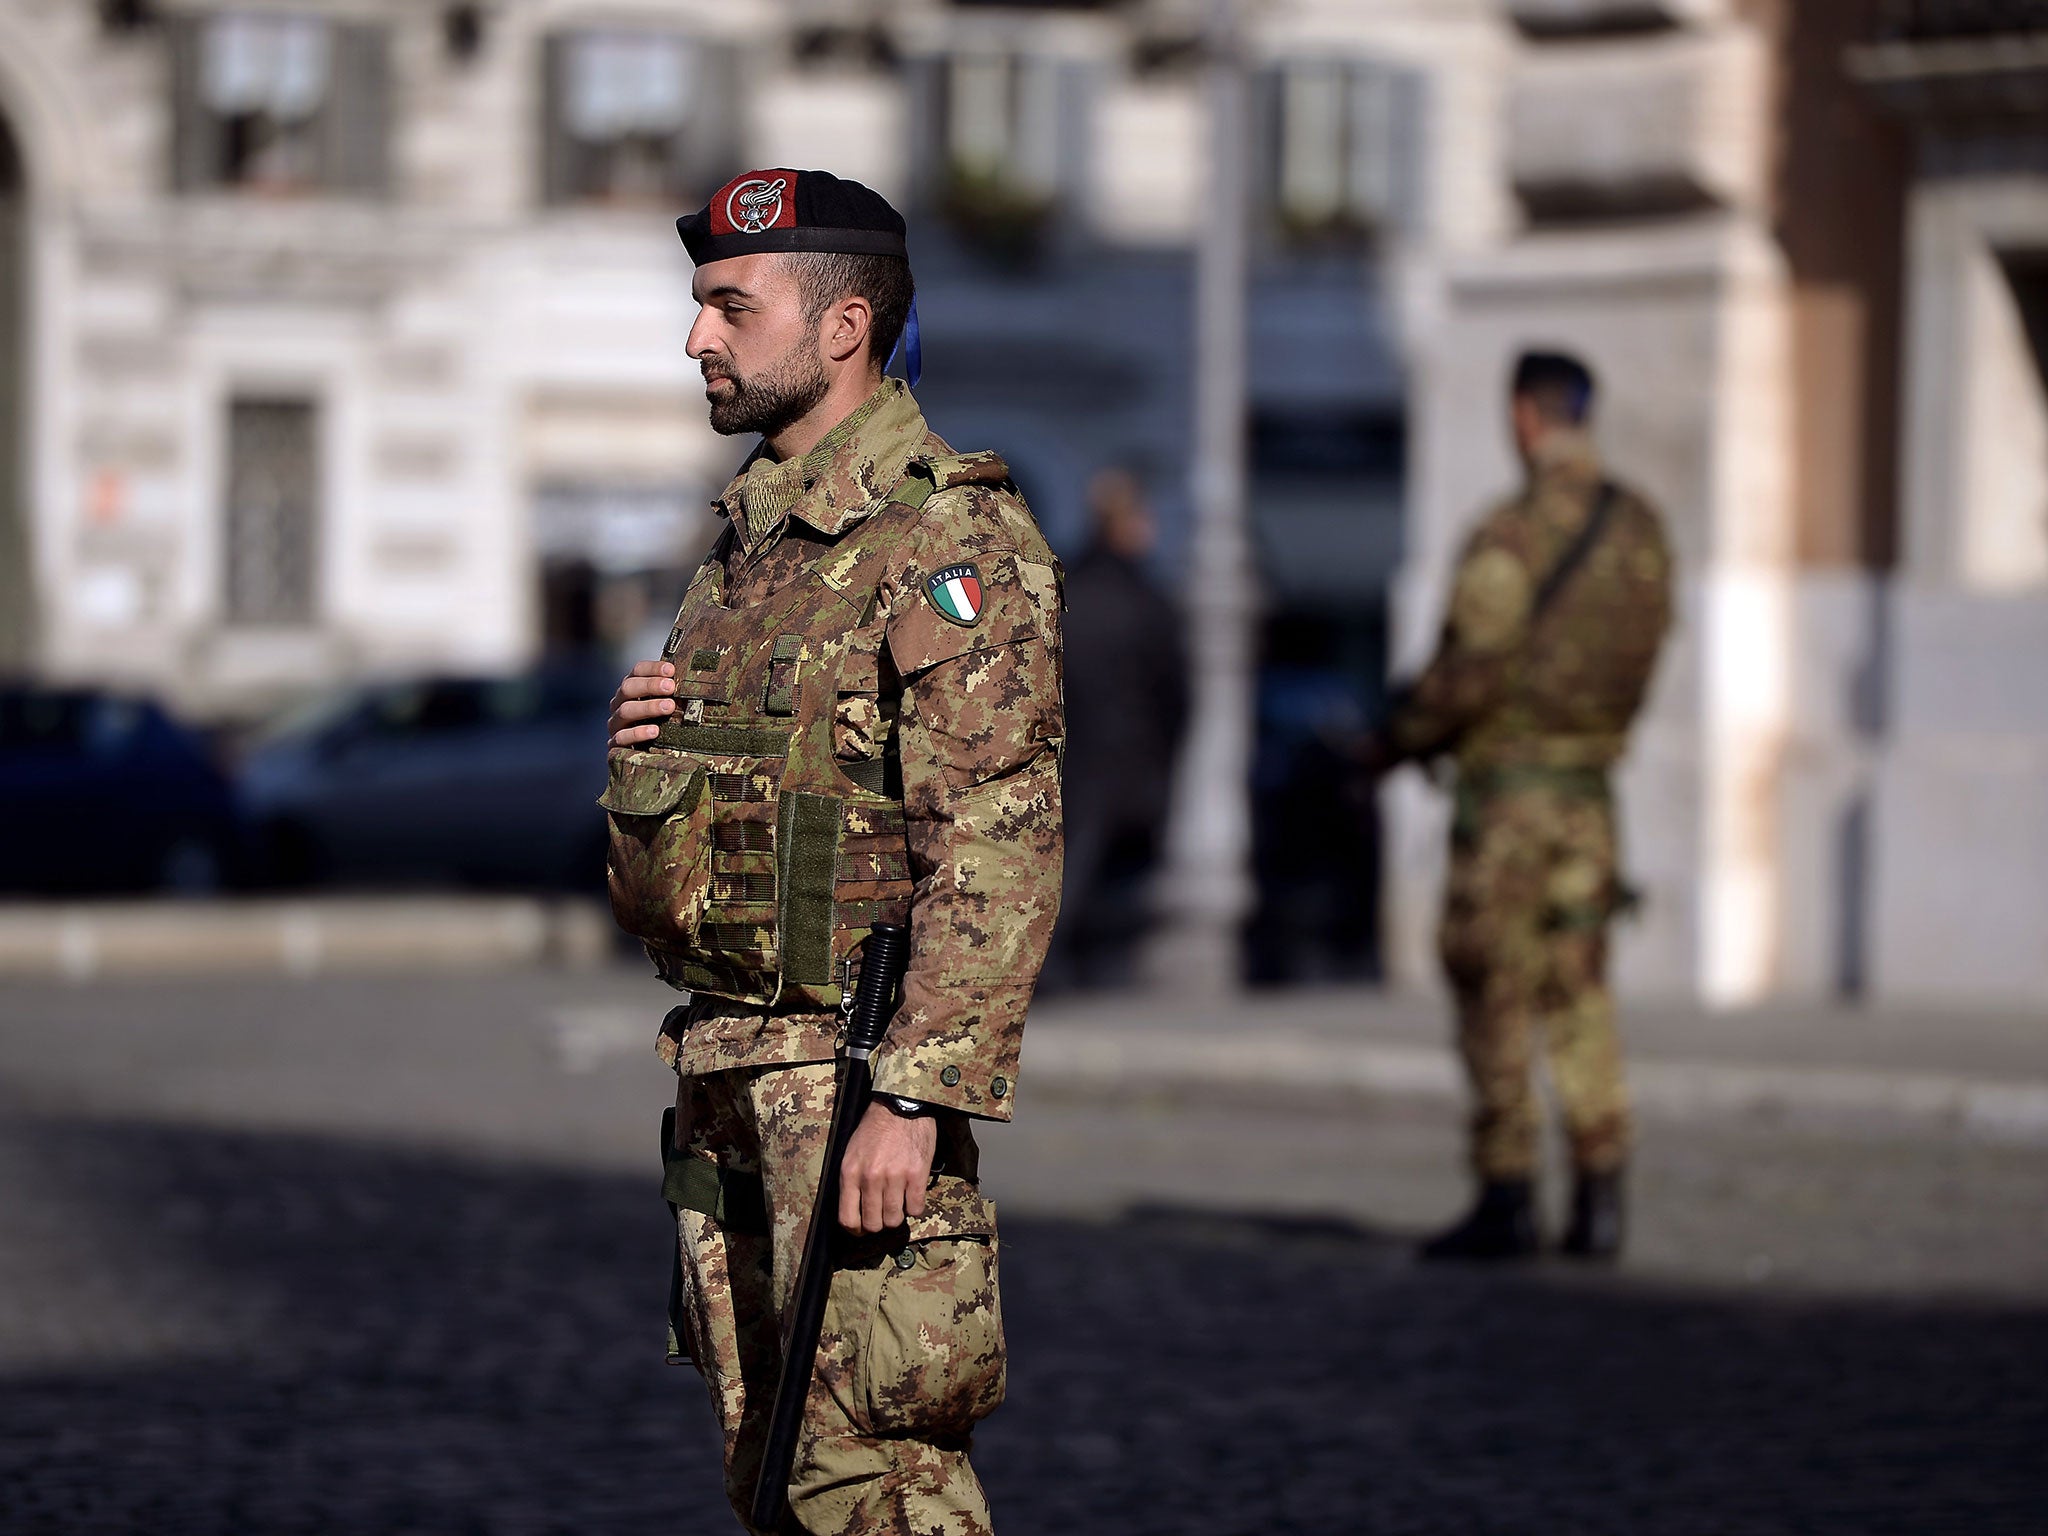 Italian soldiers patrol near the San Giovanni Basilica in Roma on November 16, 2015